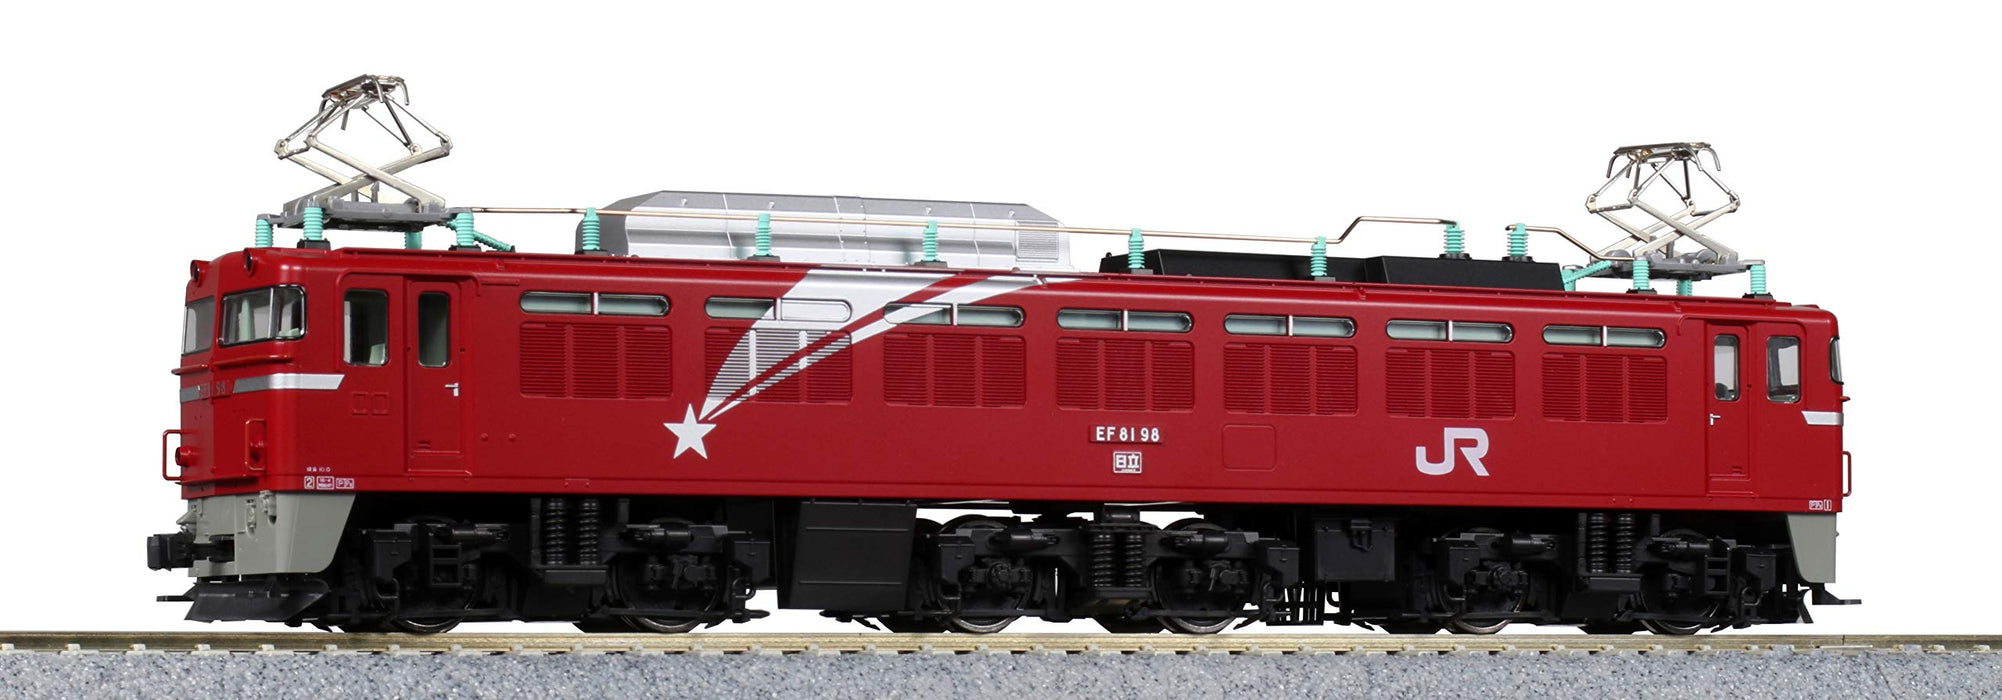 Kato Ho Gauge 1-321 Hokutosei Color Electric Locomotive Railway Model